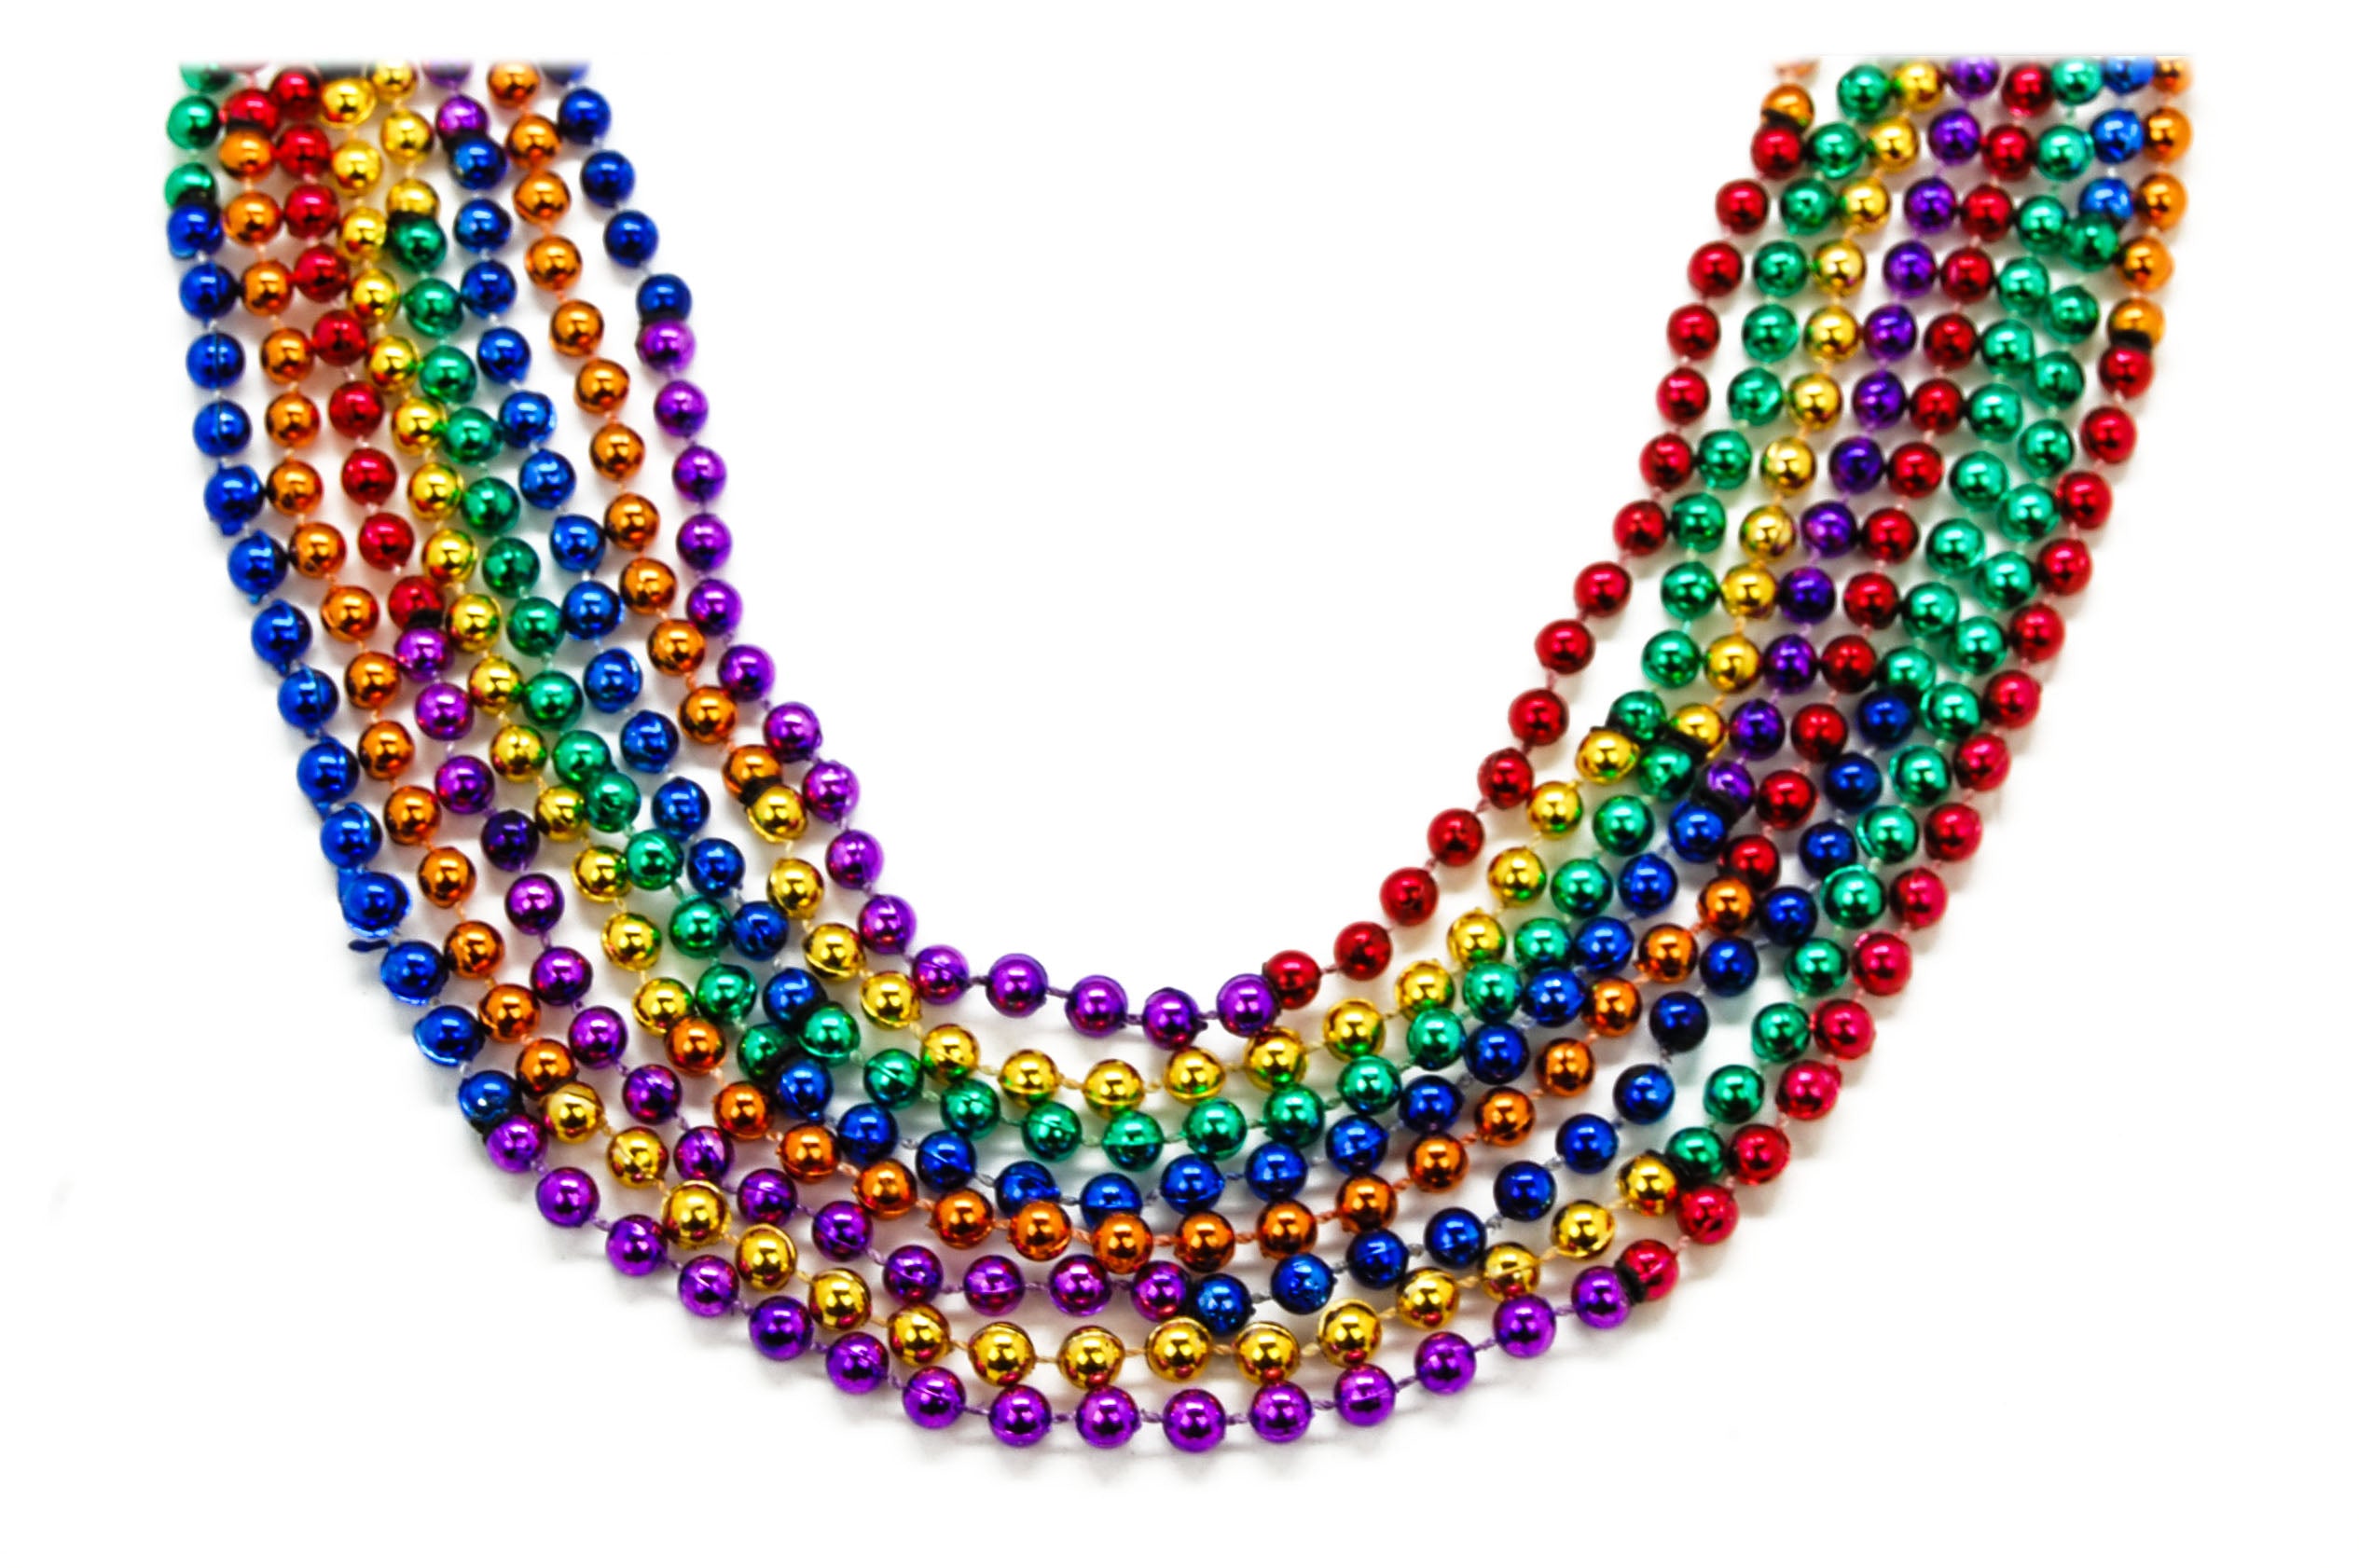 Assorted Metallic Bead Necklace Party Favor (One Dozen)